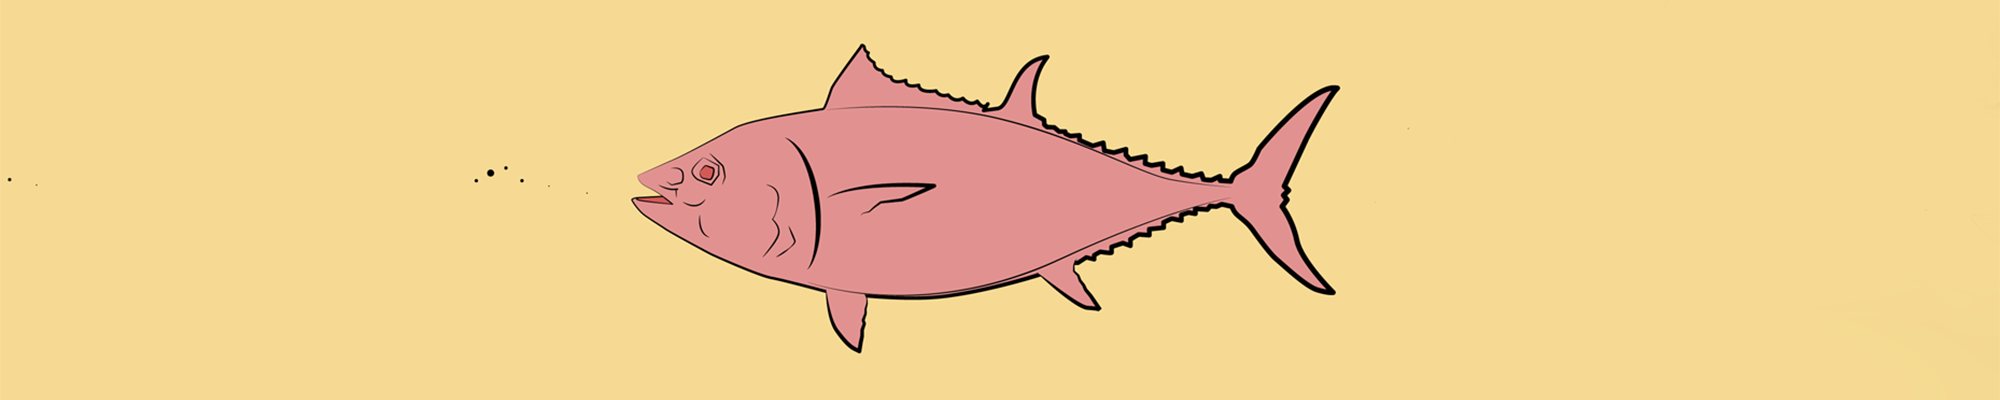 Graphic illustration of a tuna